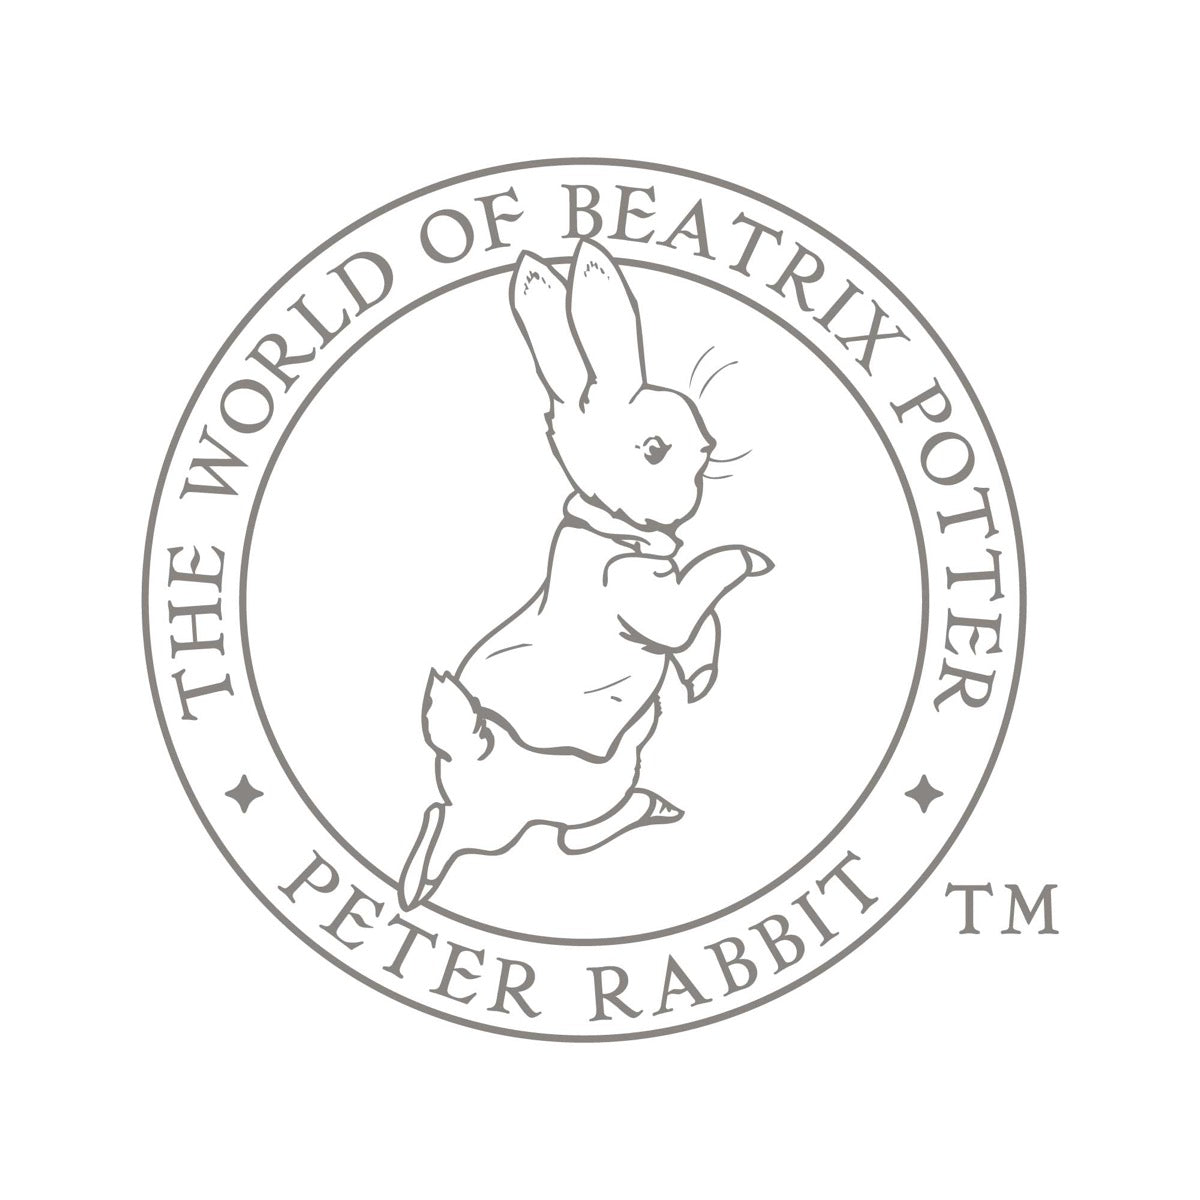 Peter Rabbit Print - Pink Personalised Letter & Name Print